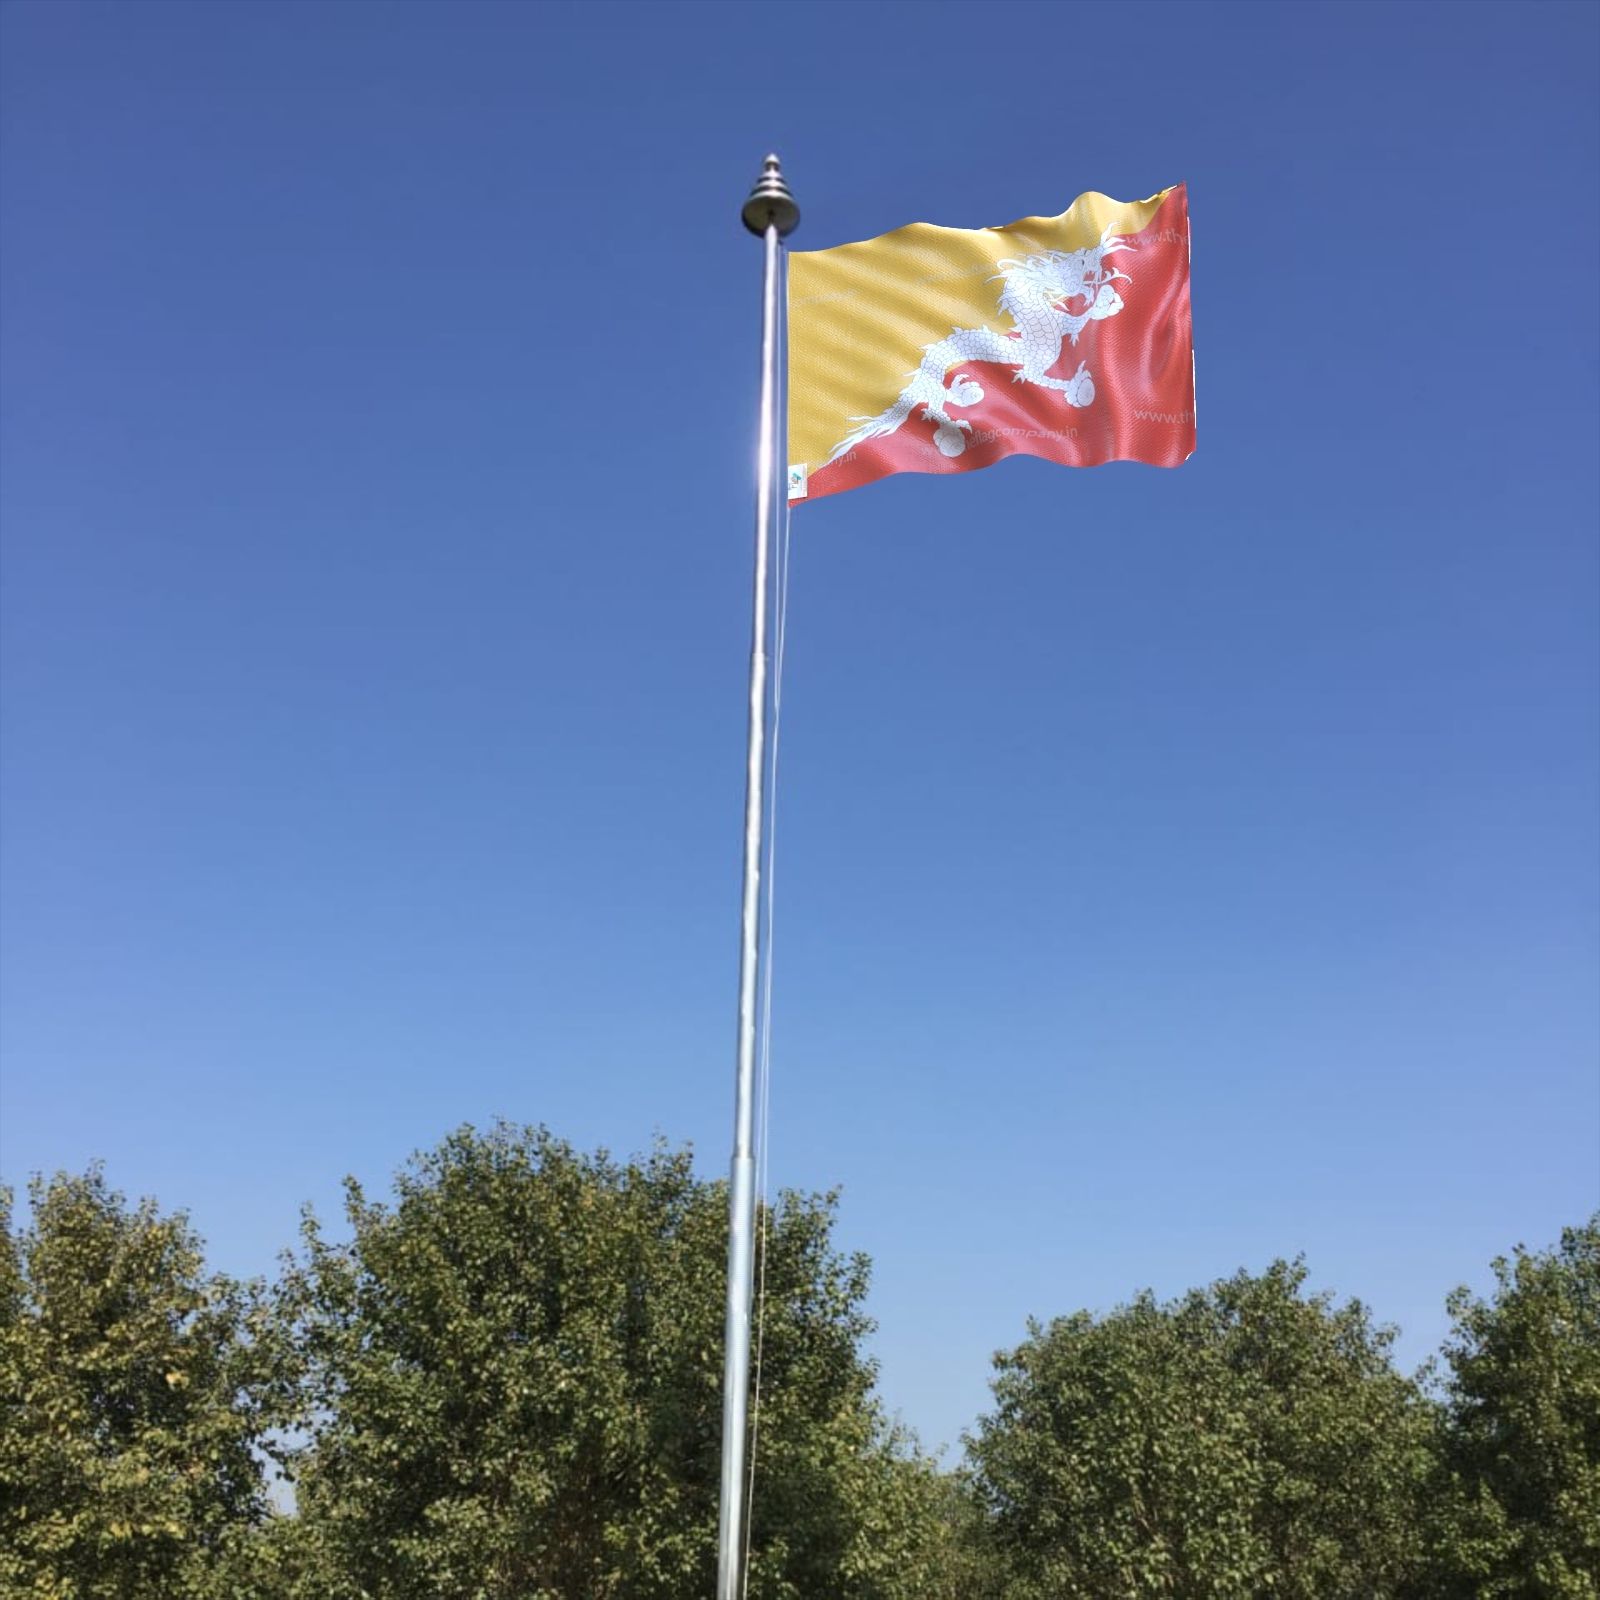 Outdoor National International Flags